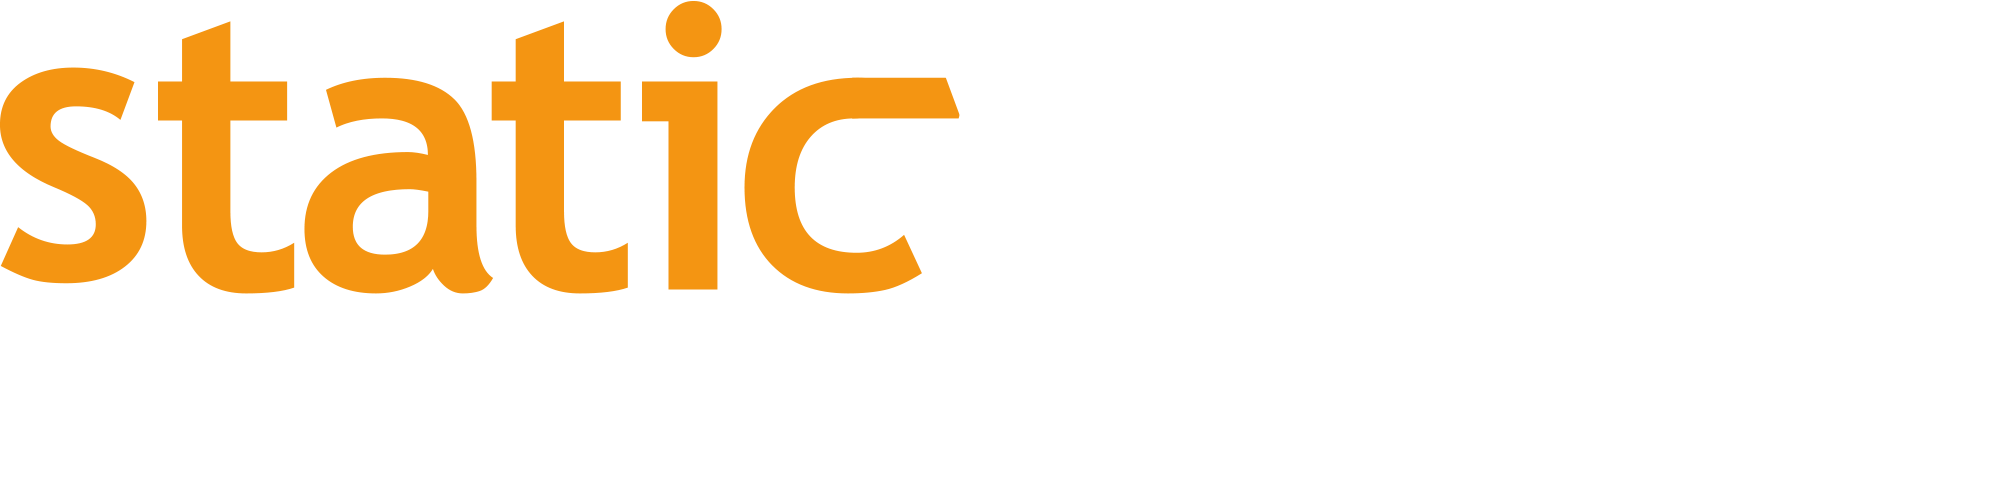 StaticWorx GroundSafe ESD Flooring logo